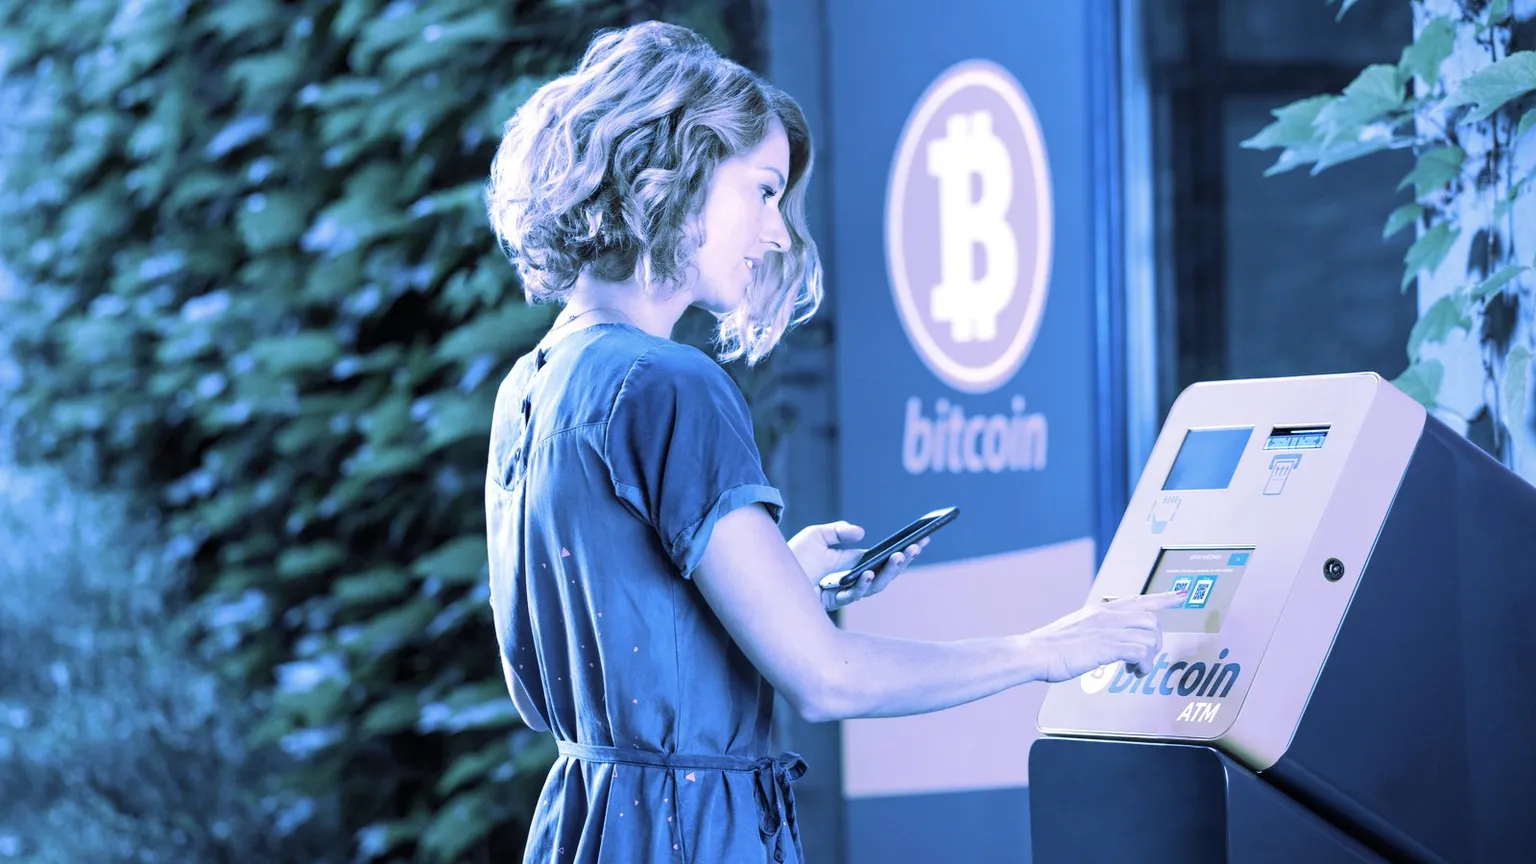 Cajero automático de bitcoin. Imagen: Shutterstock